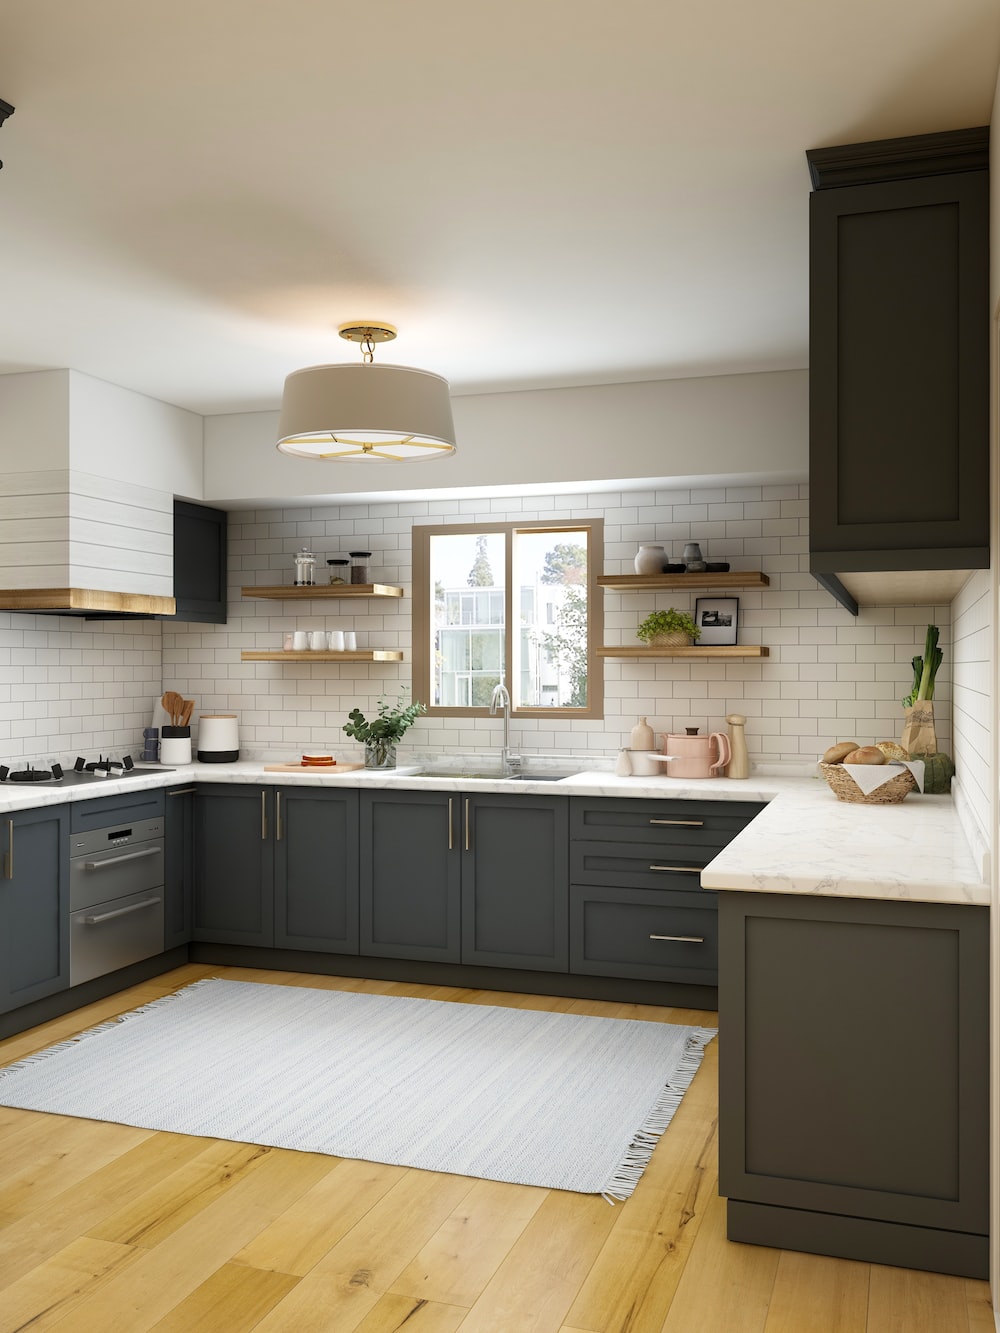 Which company modular kitchen is best?